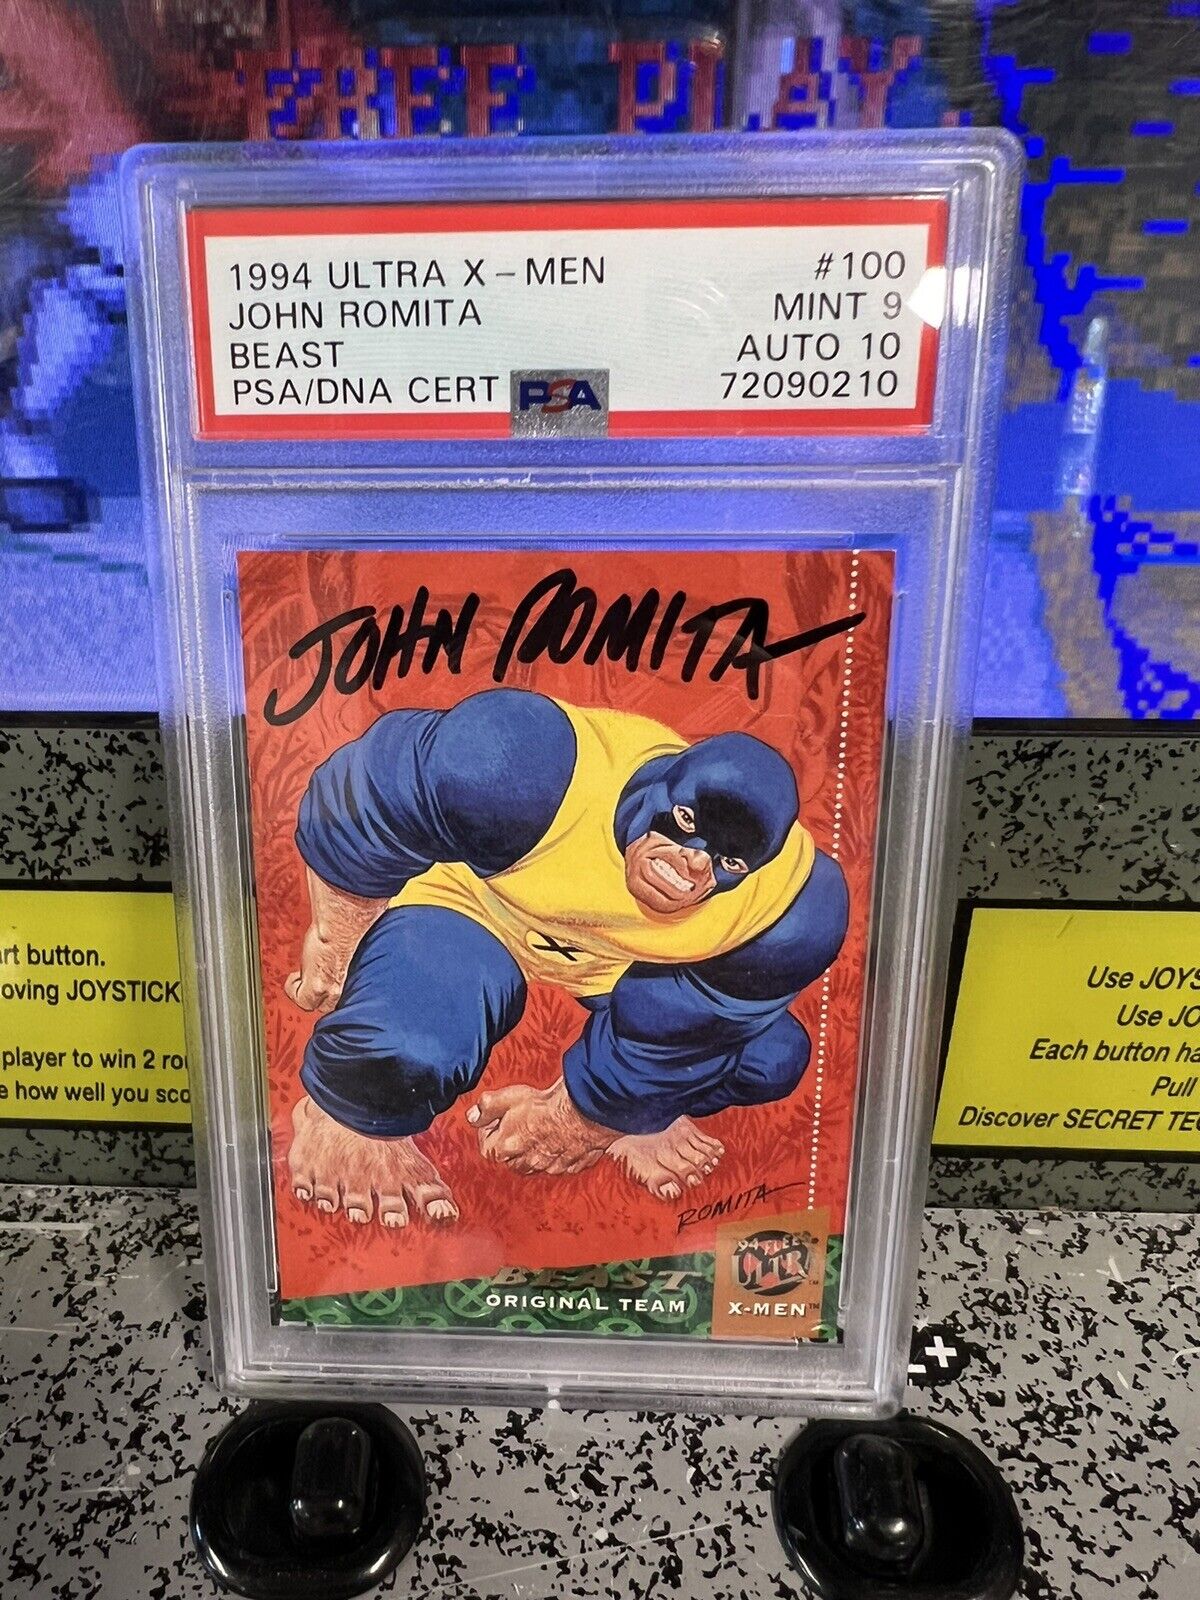 1994 Ultra X-Men Beast #100 Graded PSA 9 MINT Auto 10 John Romita PSA/DNA Cert